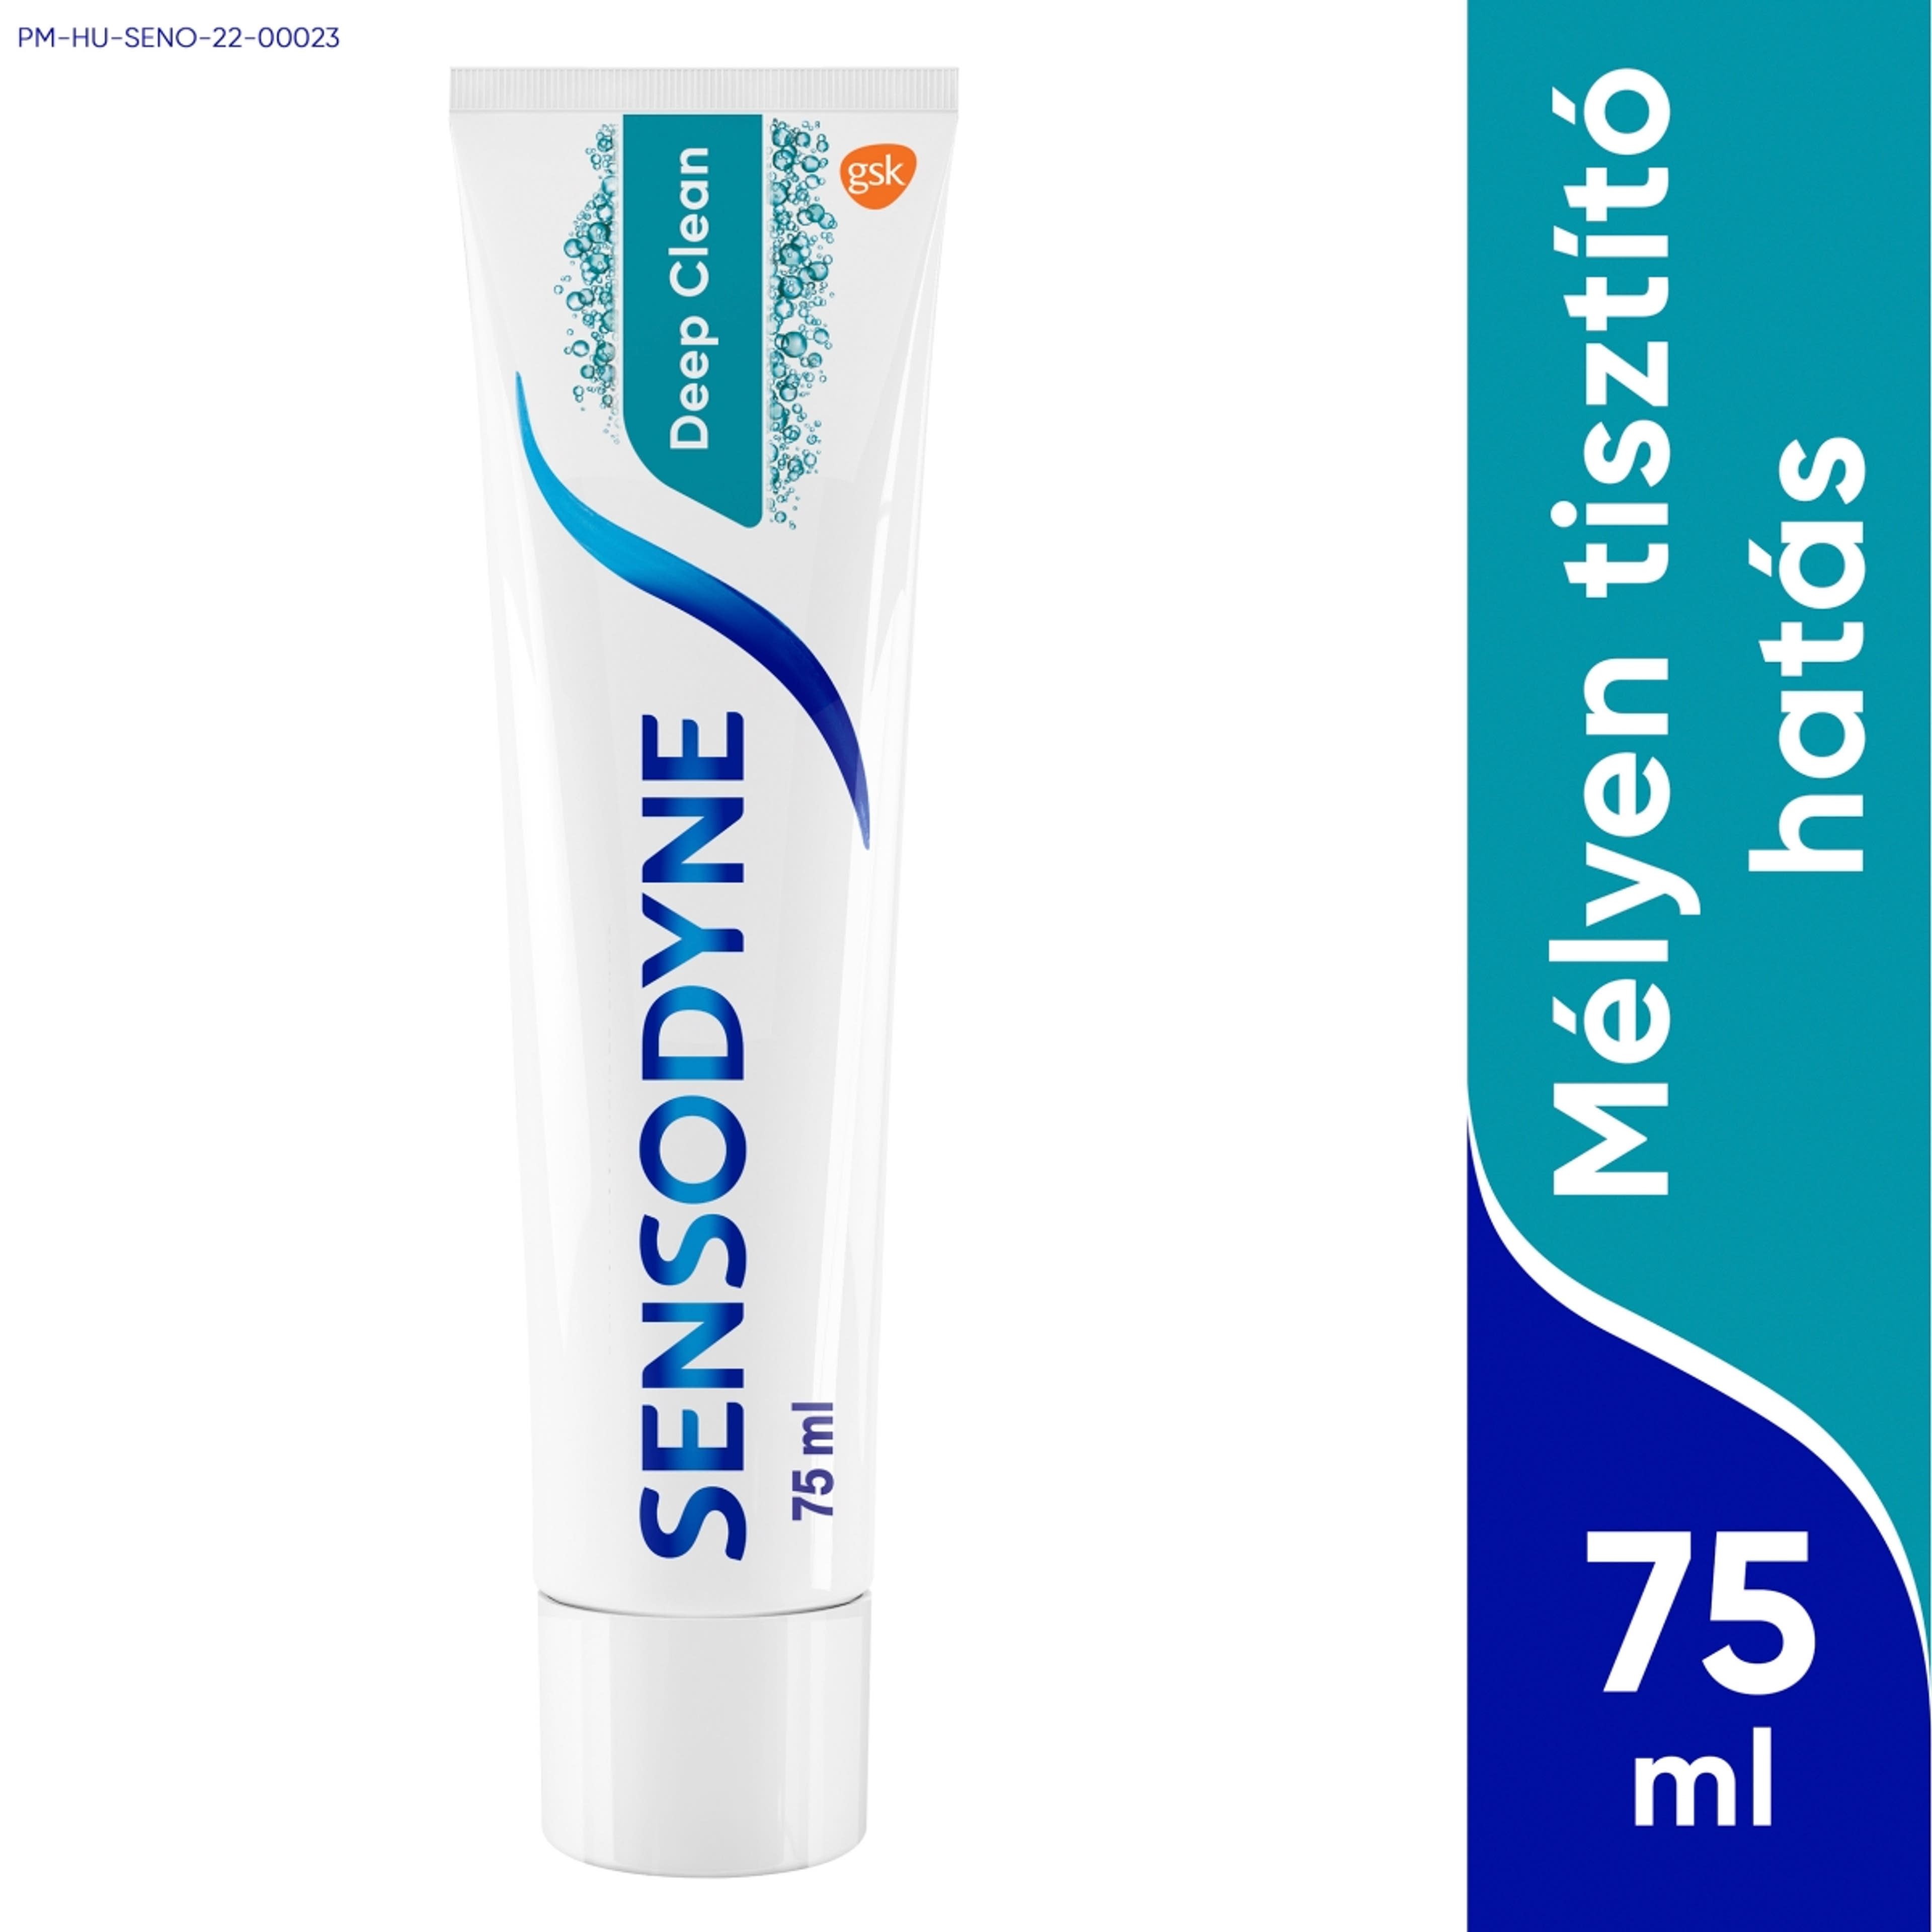 Sensodyne Deep Clean fogkrém - 75 ml